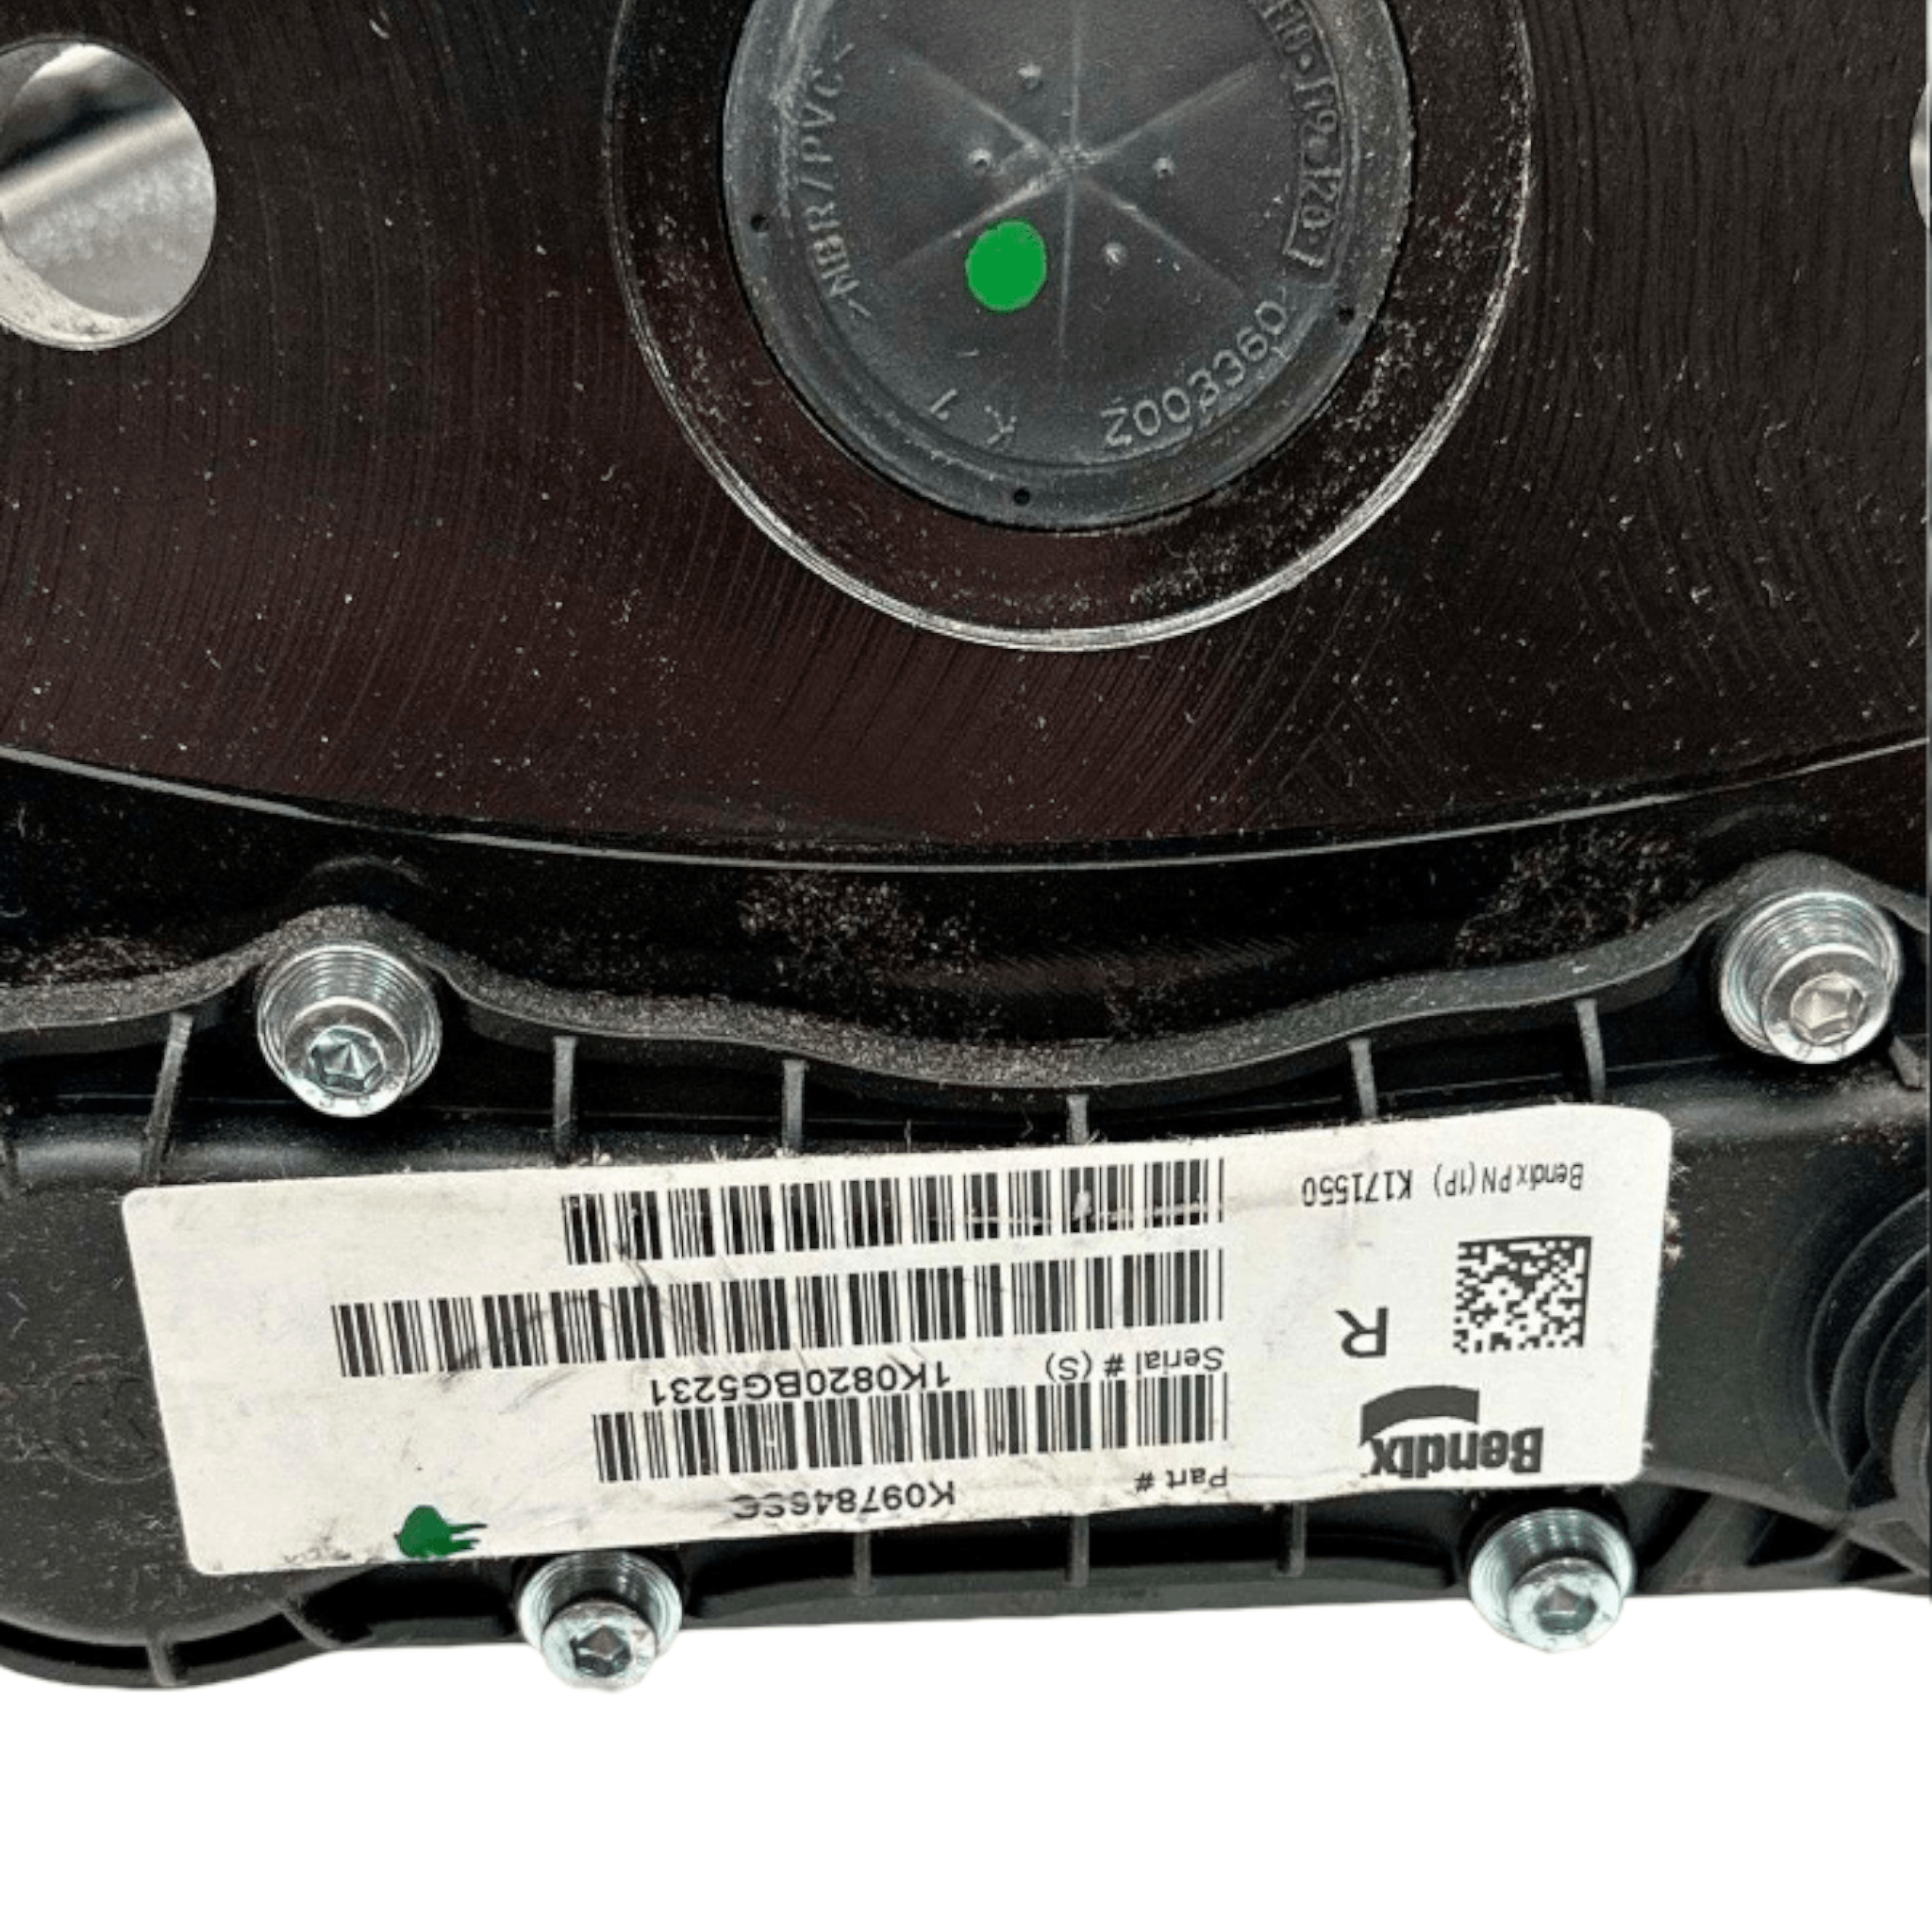 K097846 Genuine Bendix Air Disc Brake Caliper - ADVANCED TRUCK PARTS